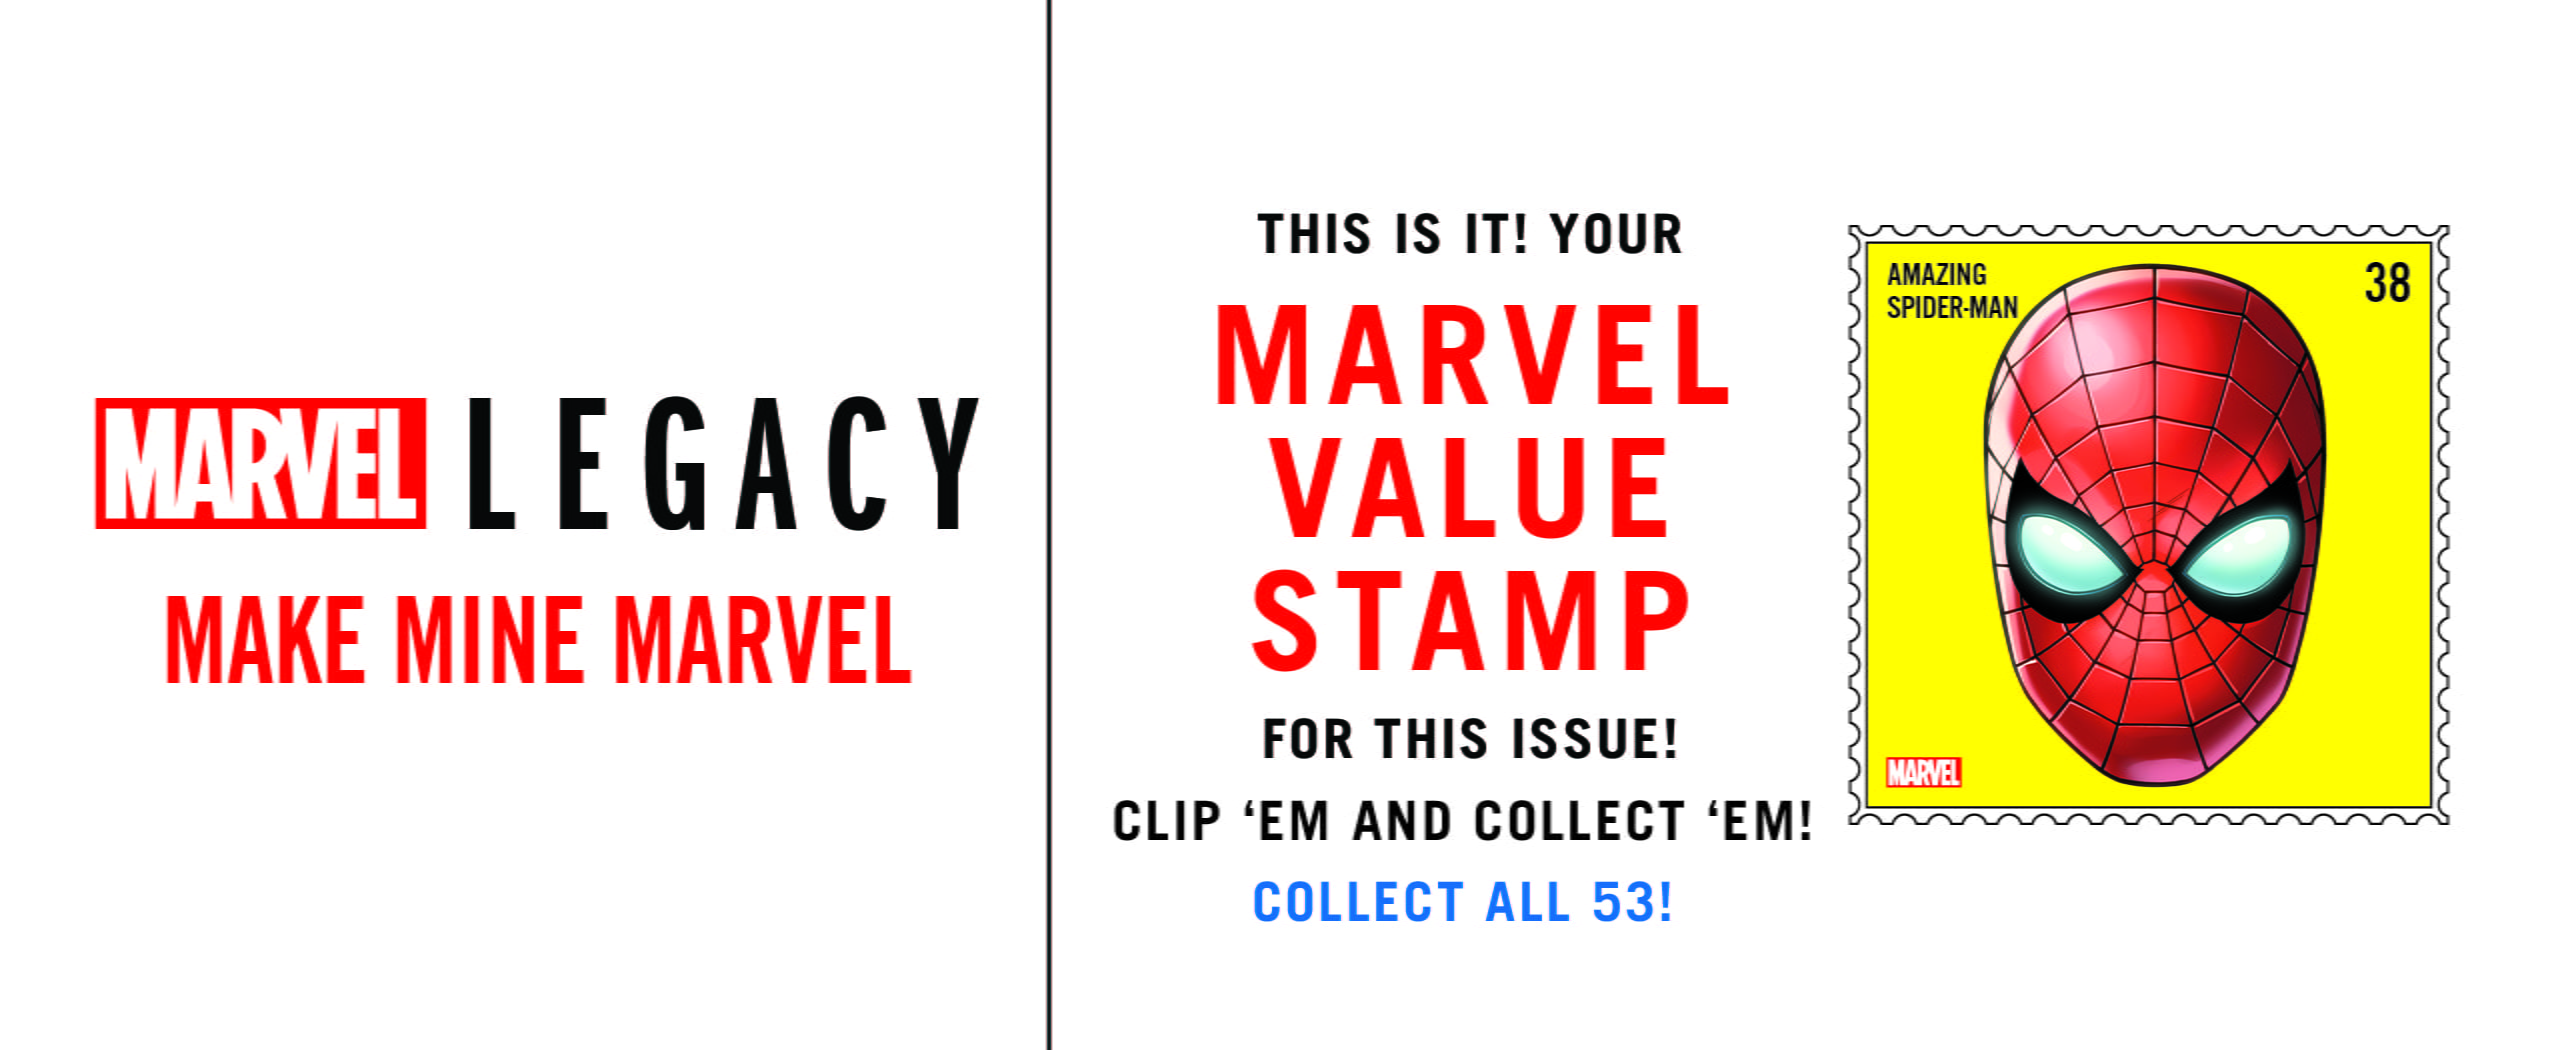 marvel-legacy-re-introduces-marvel-value-stamps-360-magazine-green-design-pop-news